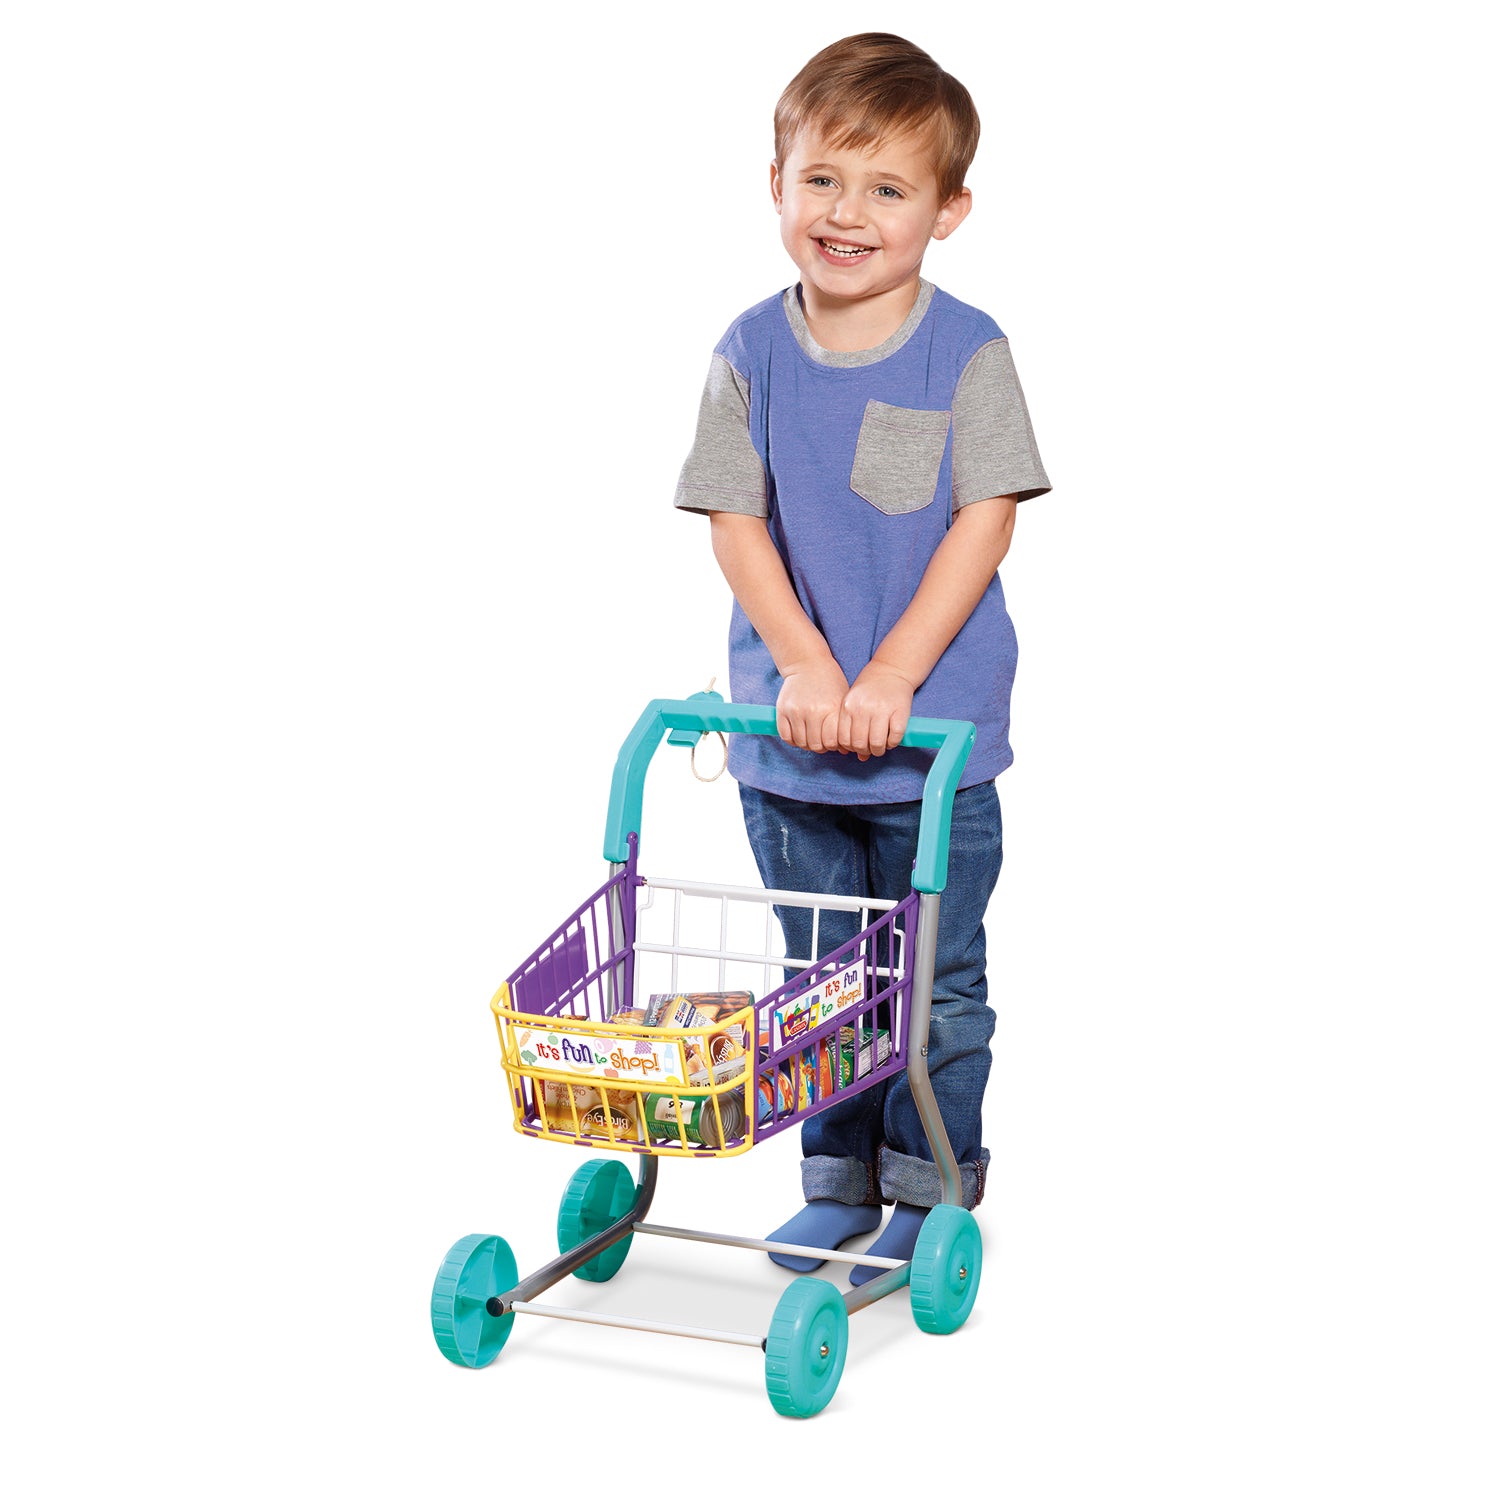 Casdon - Shopping Trolley Toy